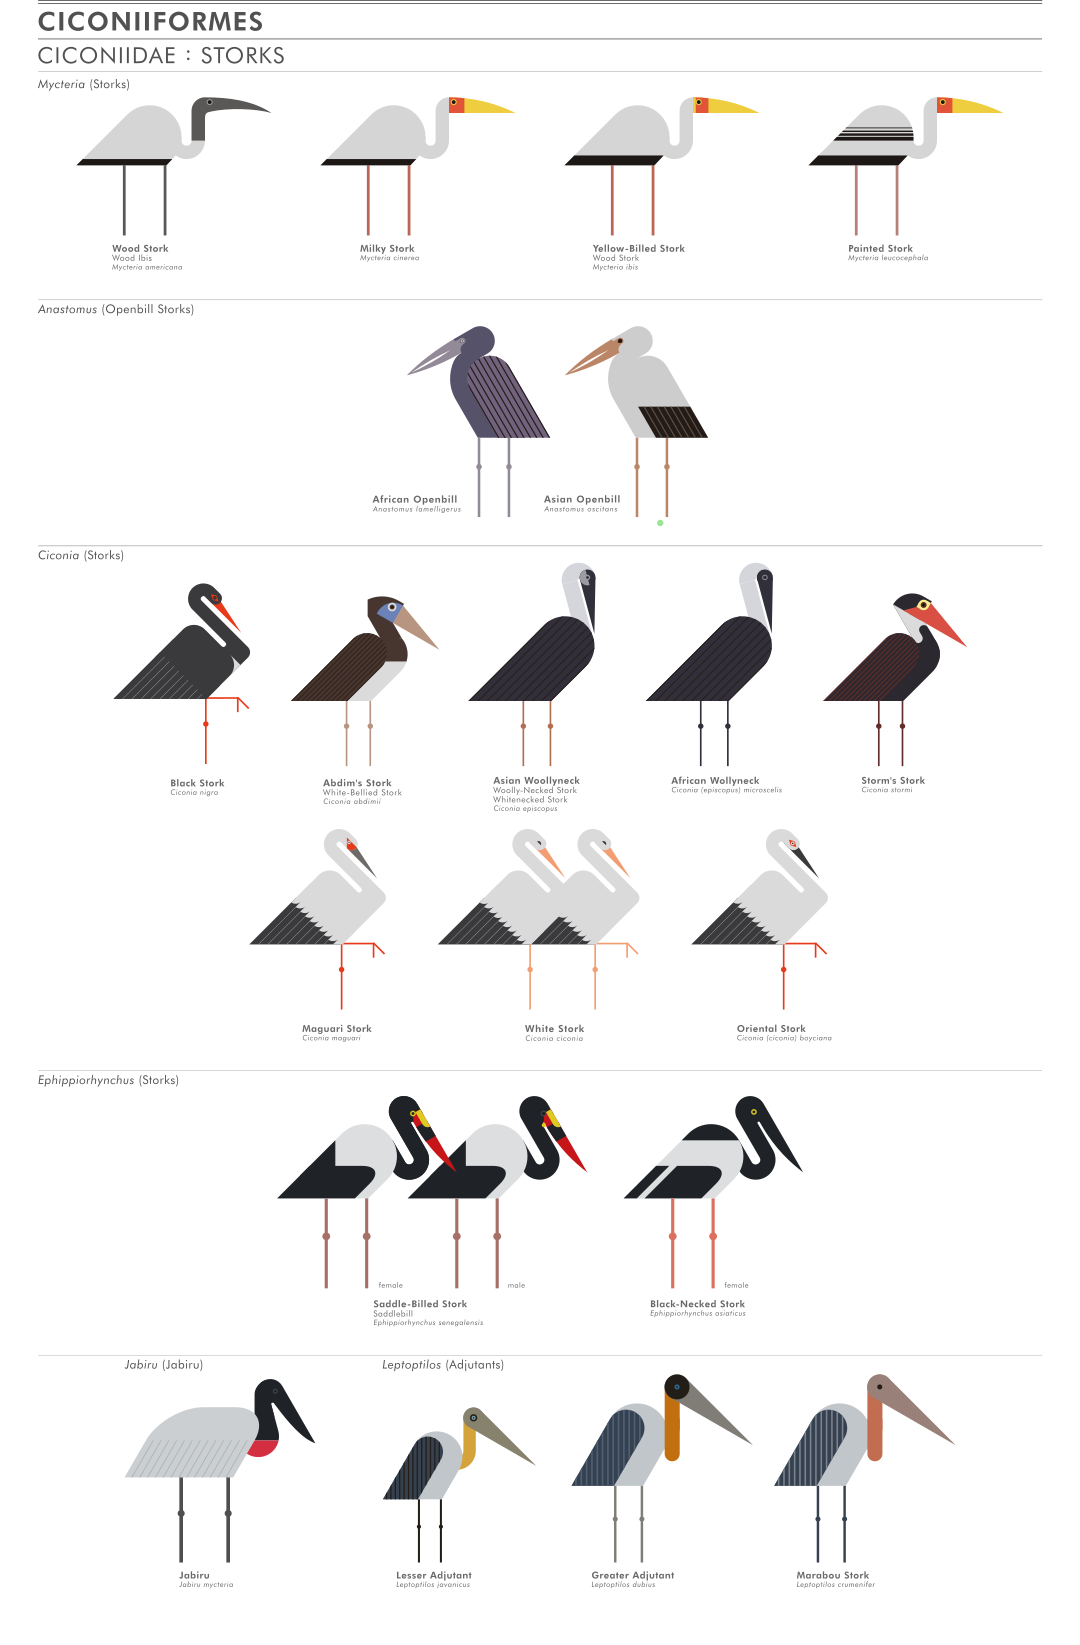 scott partridge - ave - avian vector encyclopedia - storks Ciconiidae Ciconiiformes - bird vector art